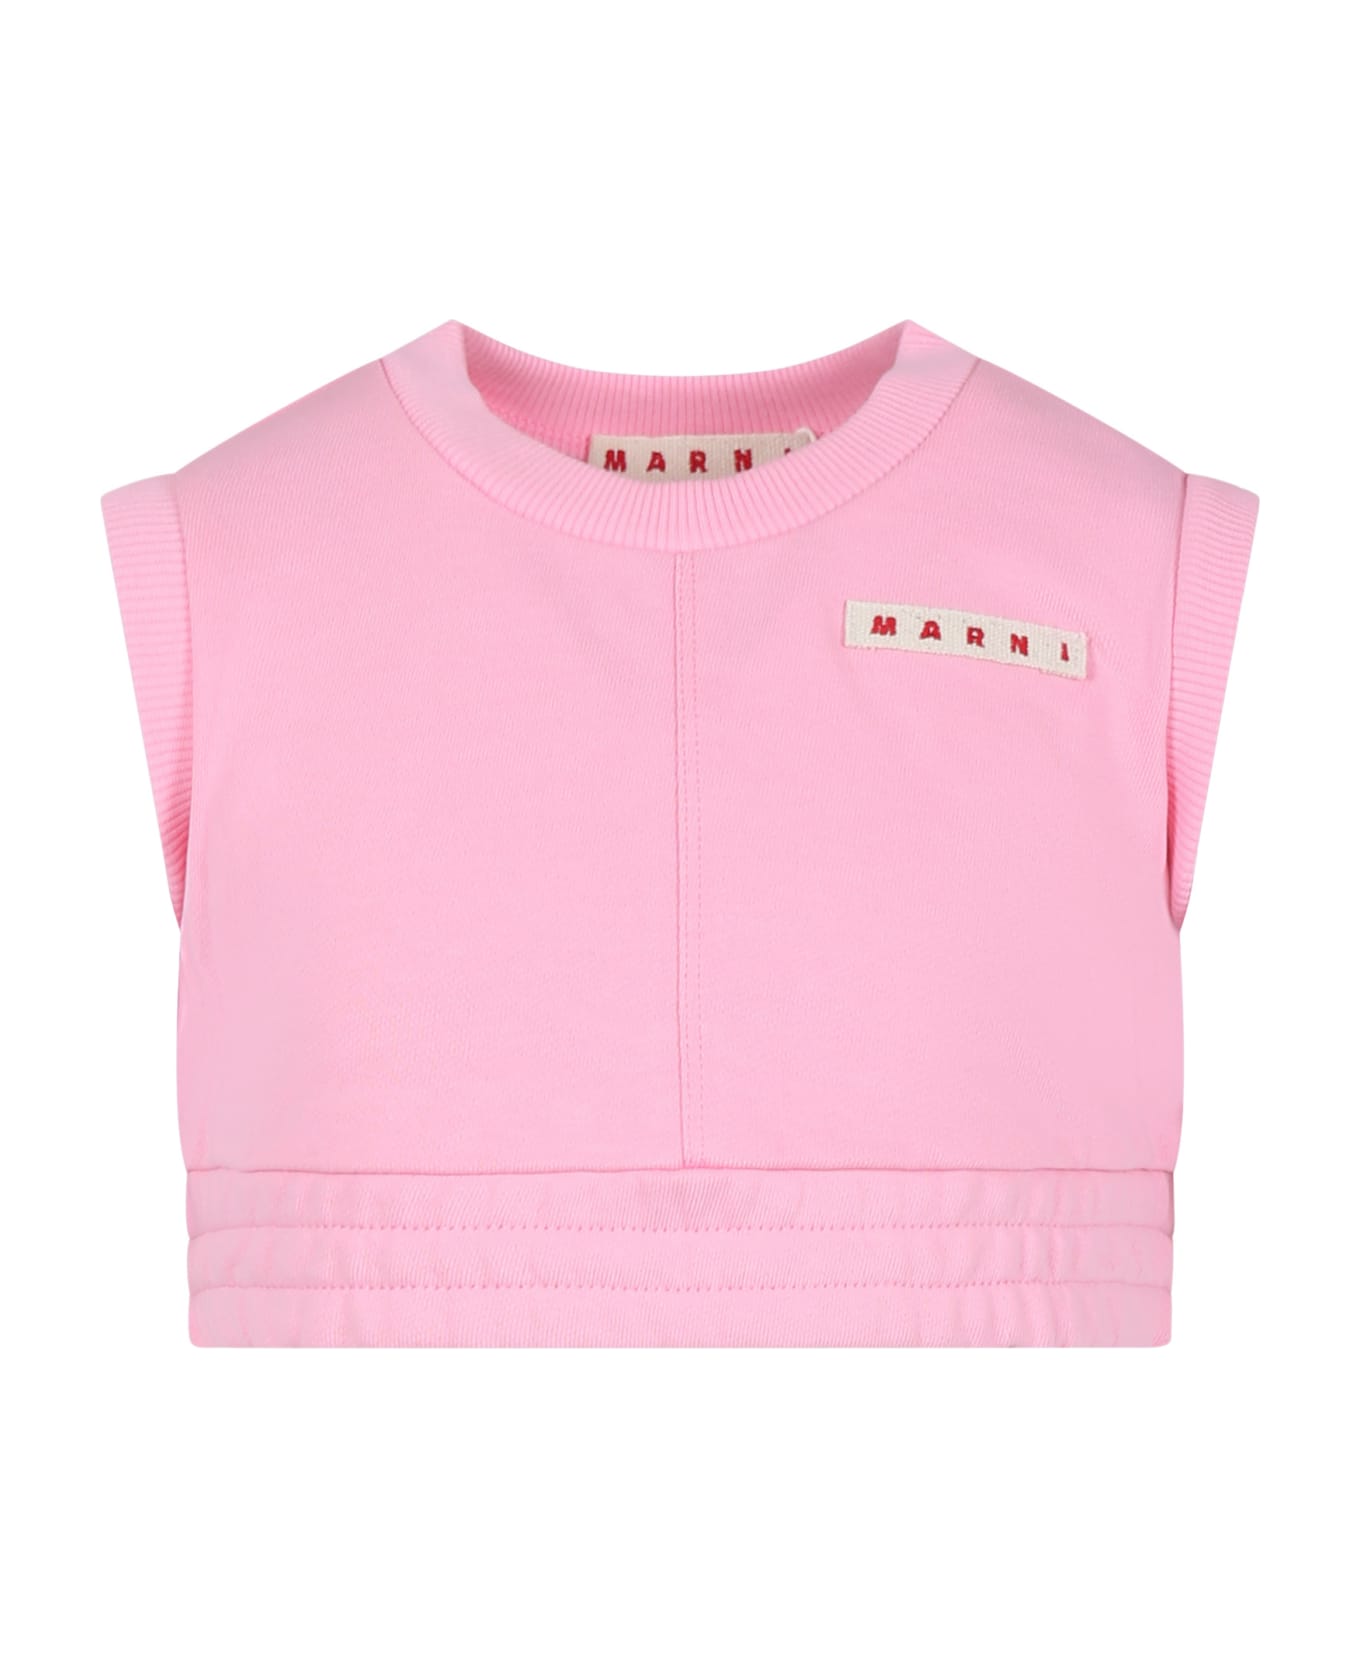 Marni Pink Top Gor Girl With Logo - Pink